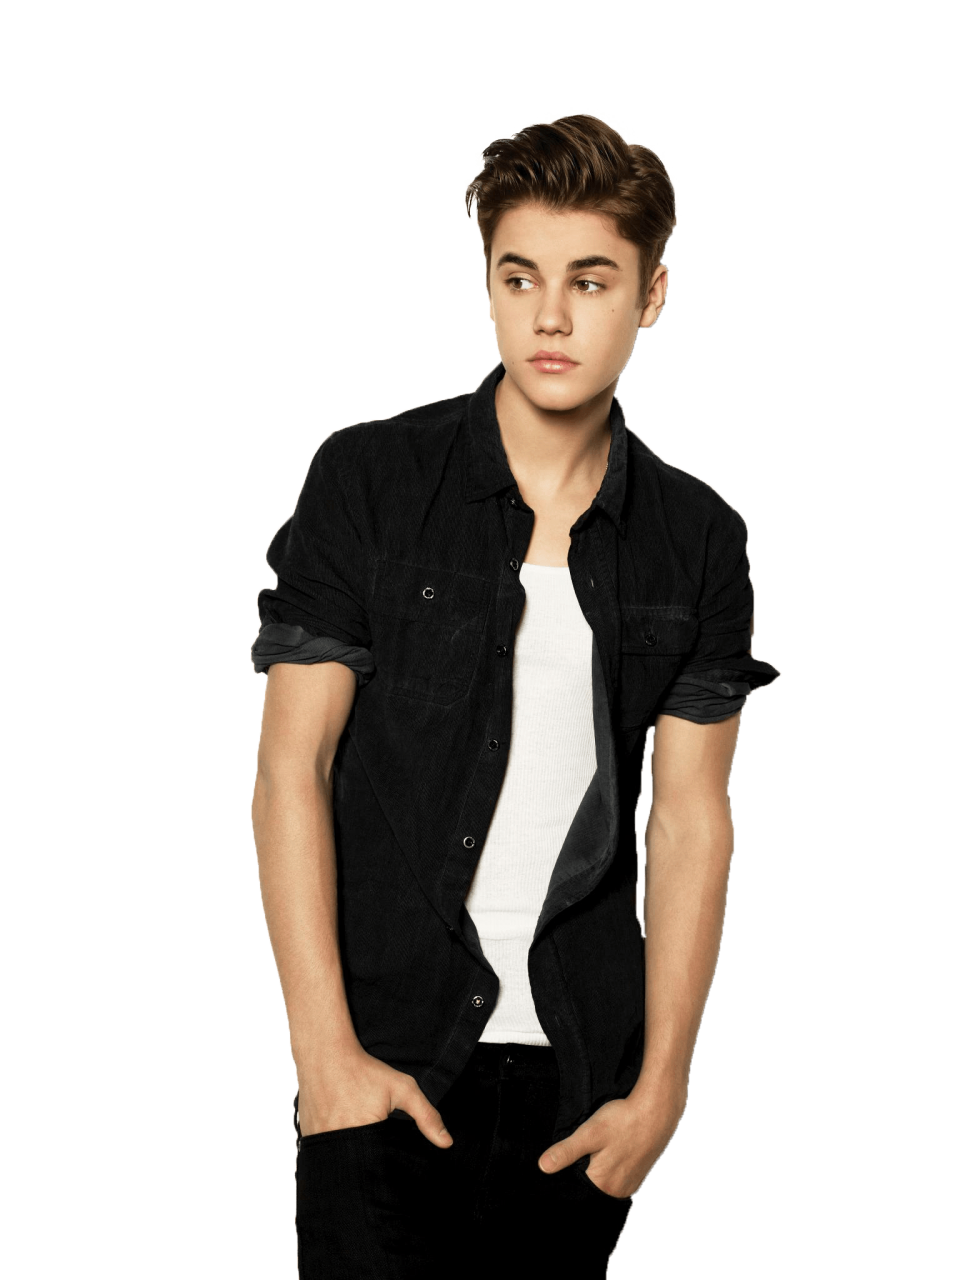 Full Body Justin Bieber PNG Transparent Image